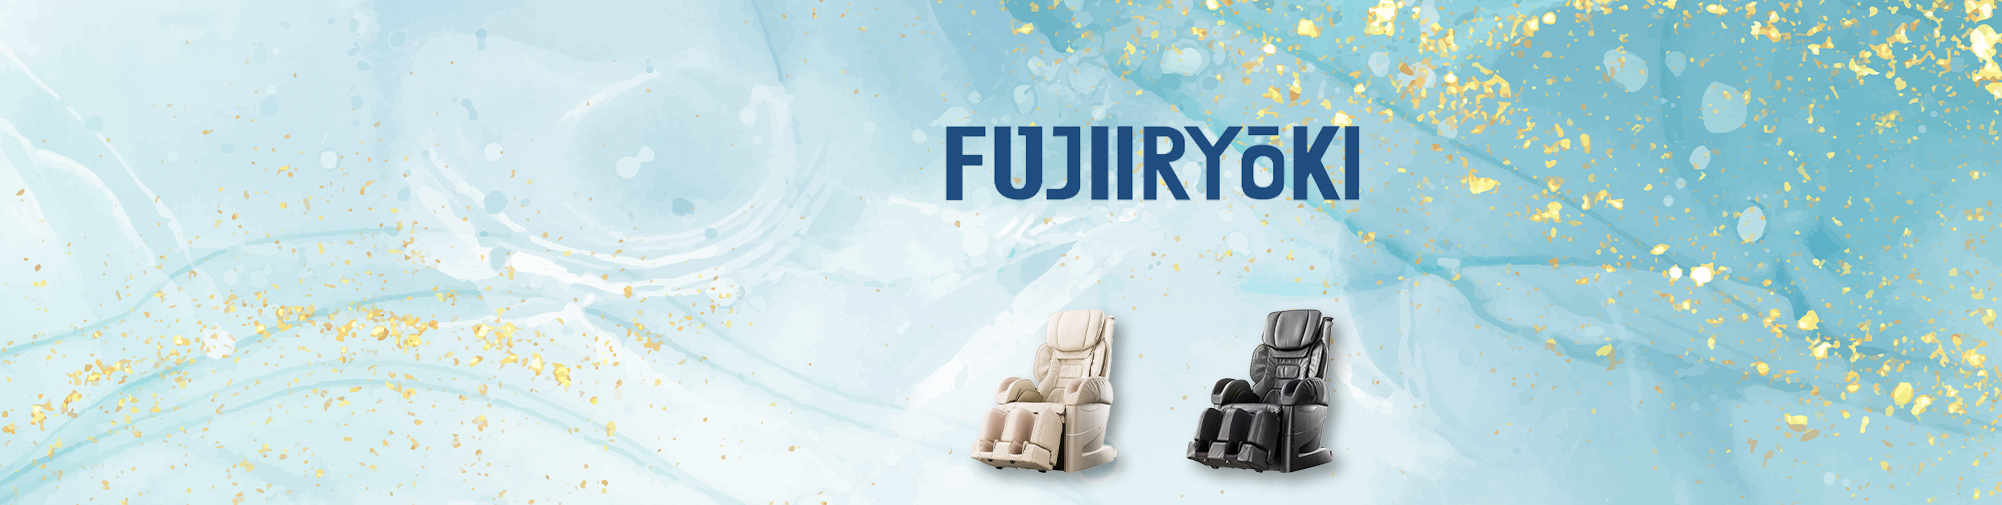 Fujiiryoki - La historia de los sillones de masaje | Massage Chair World